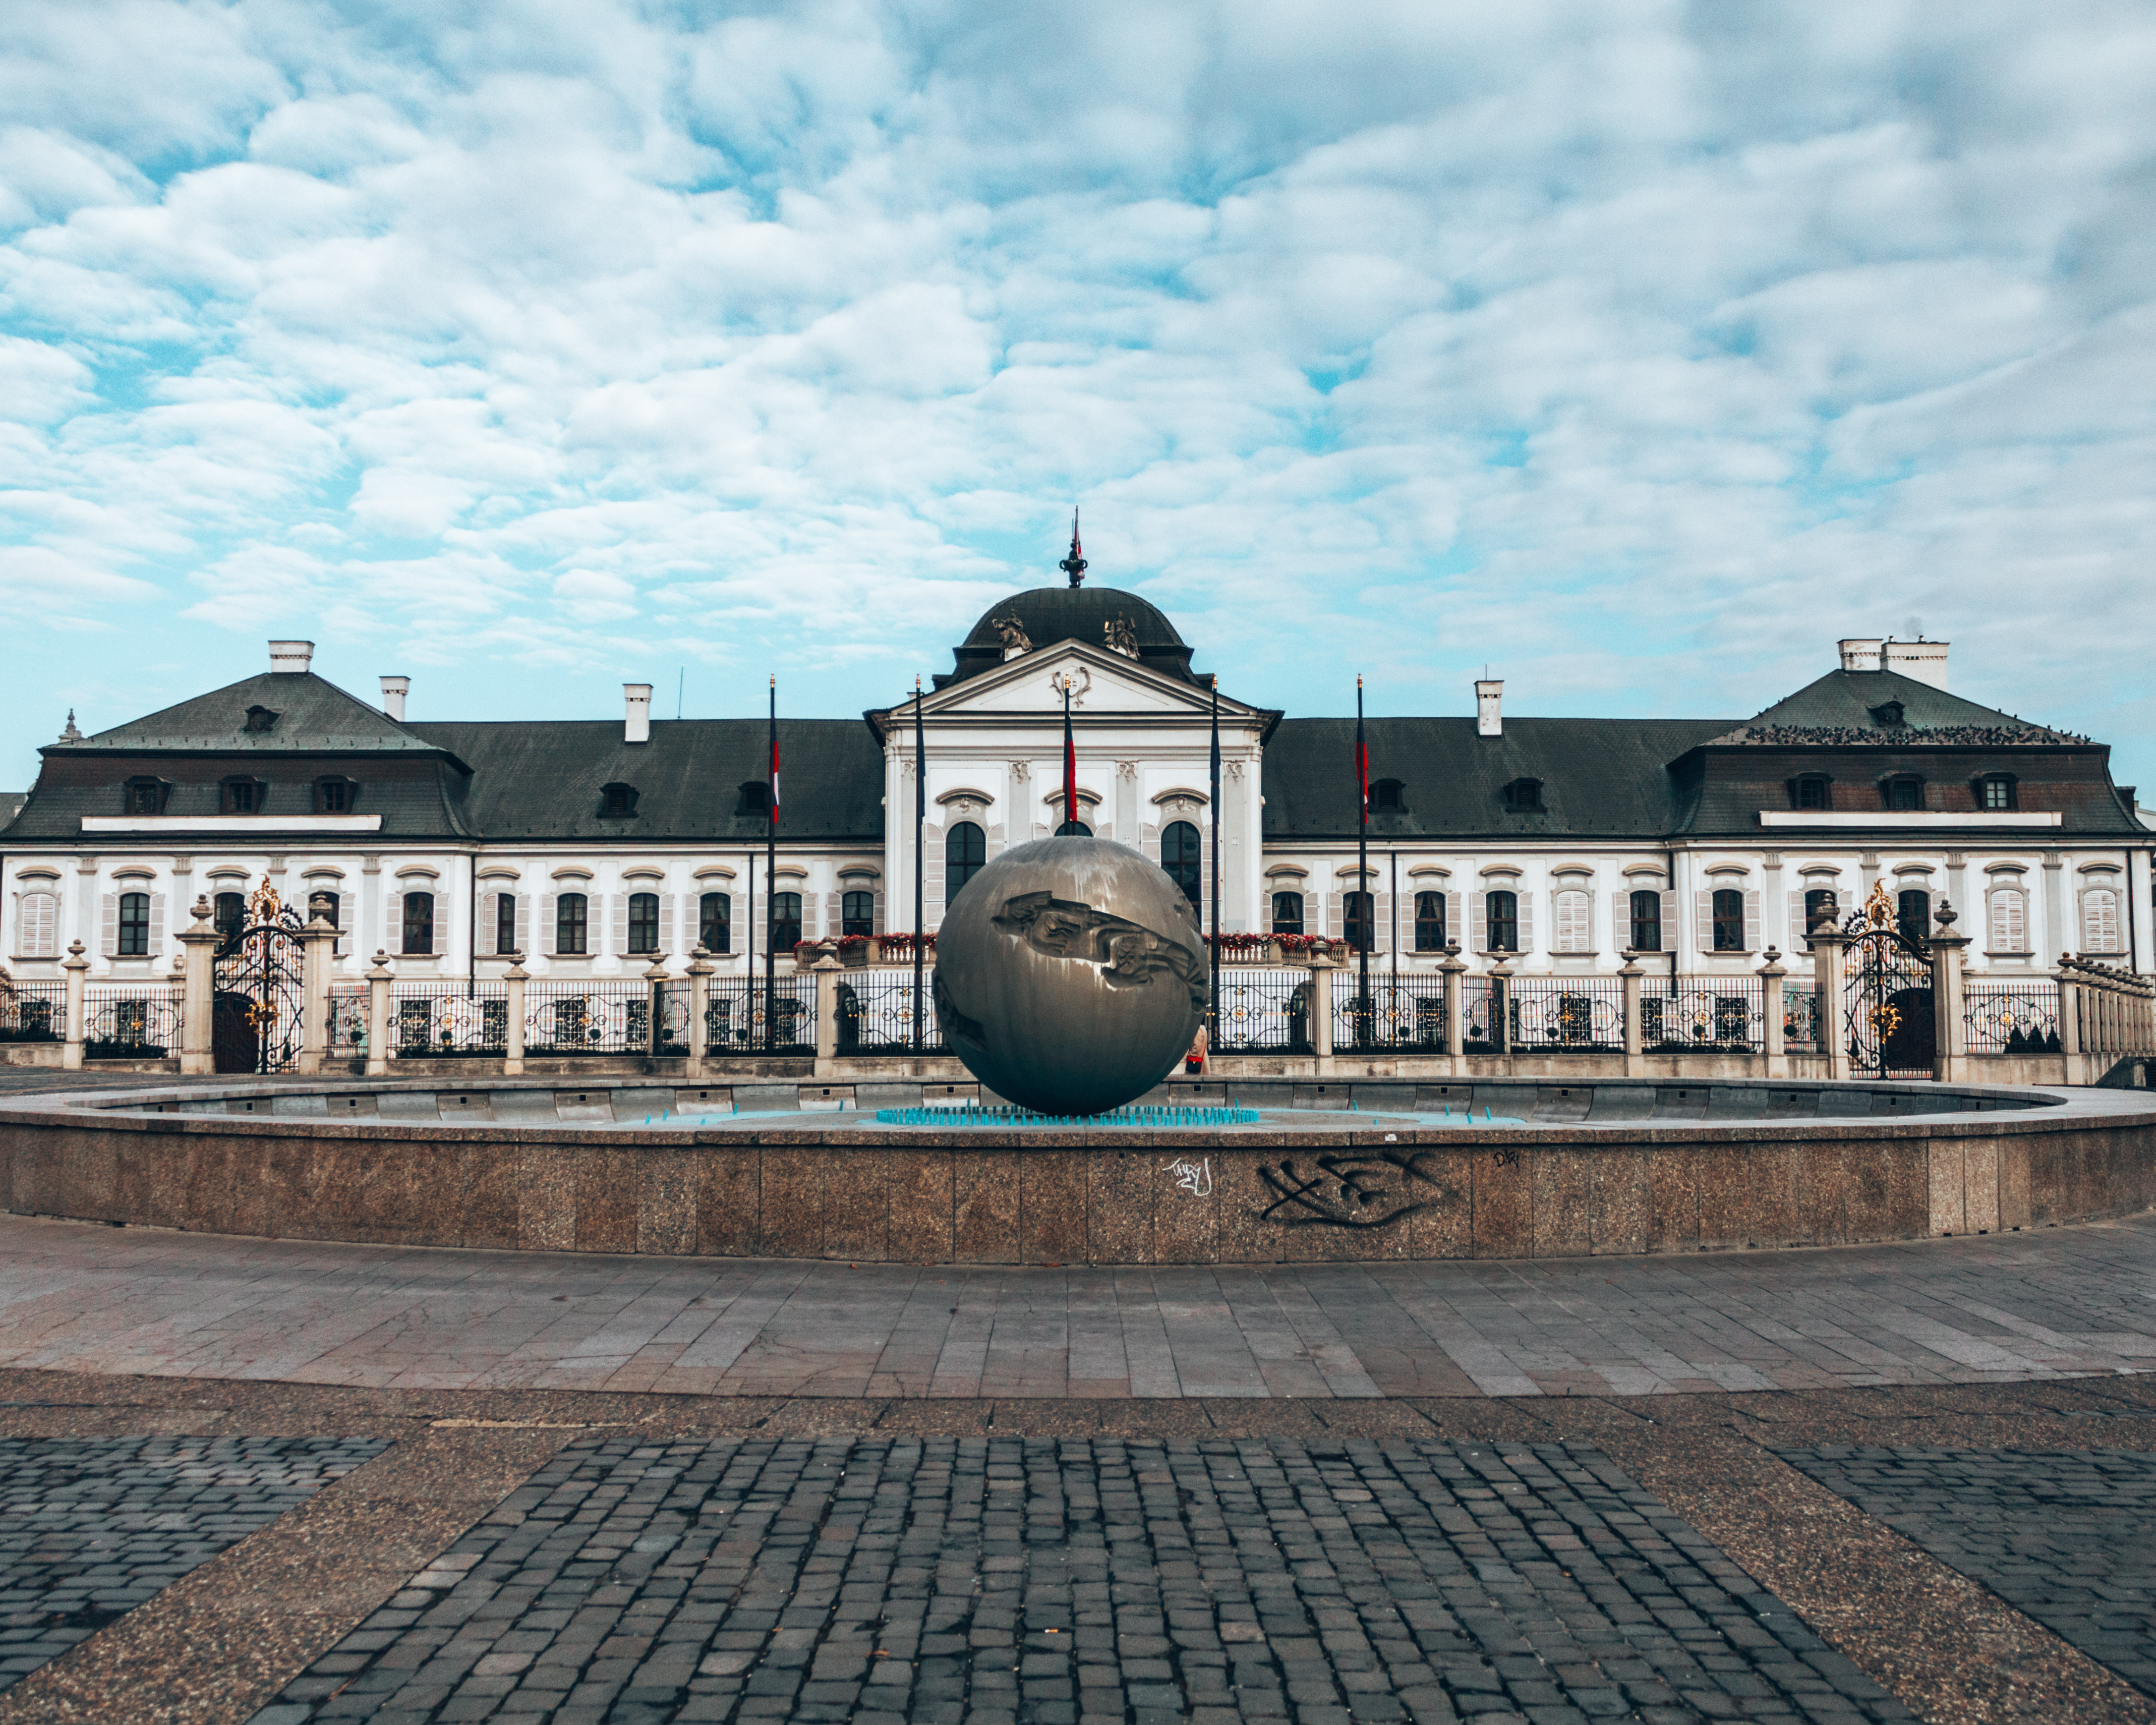 The famous Grassalkovich Palace in Bratislava, Slovakia